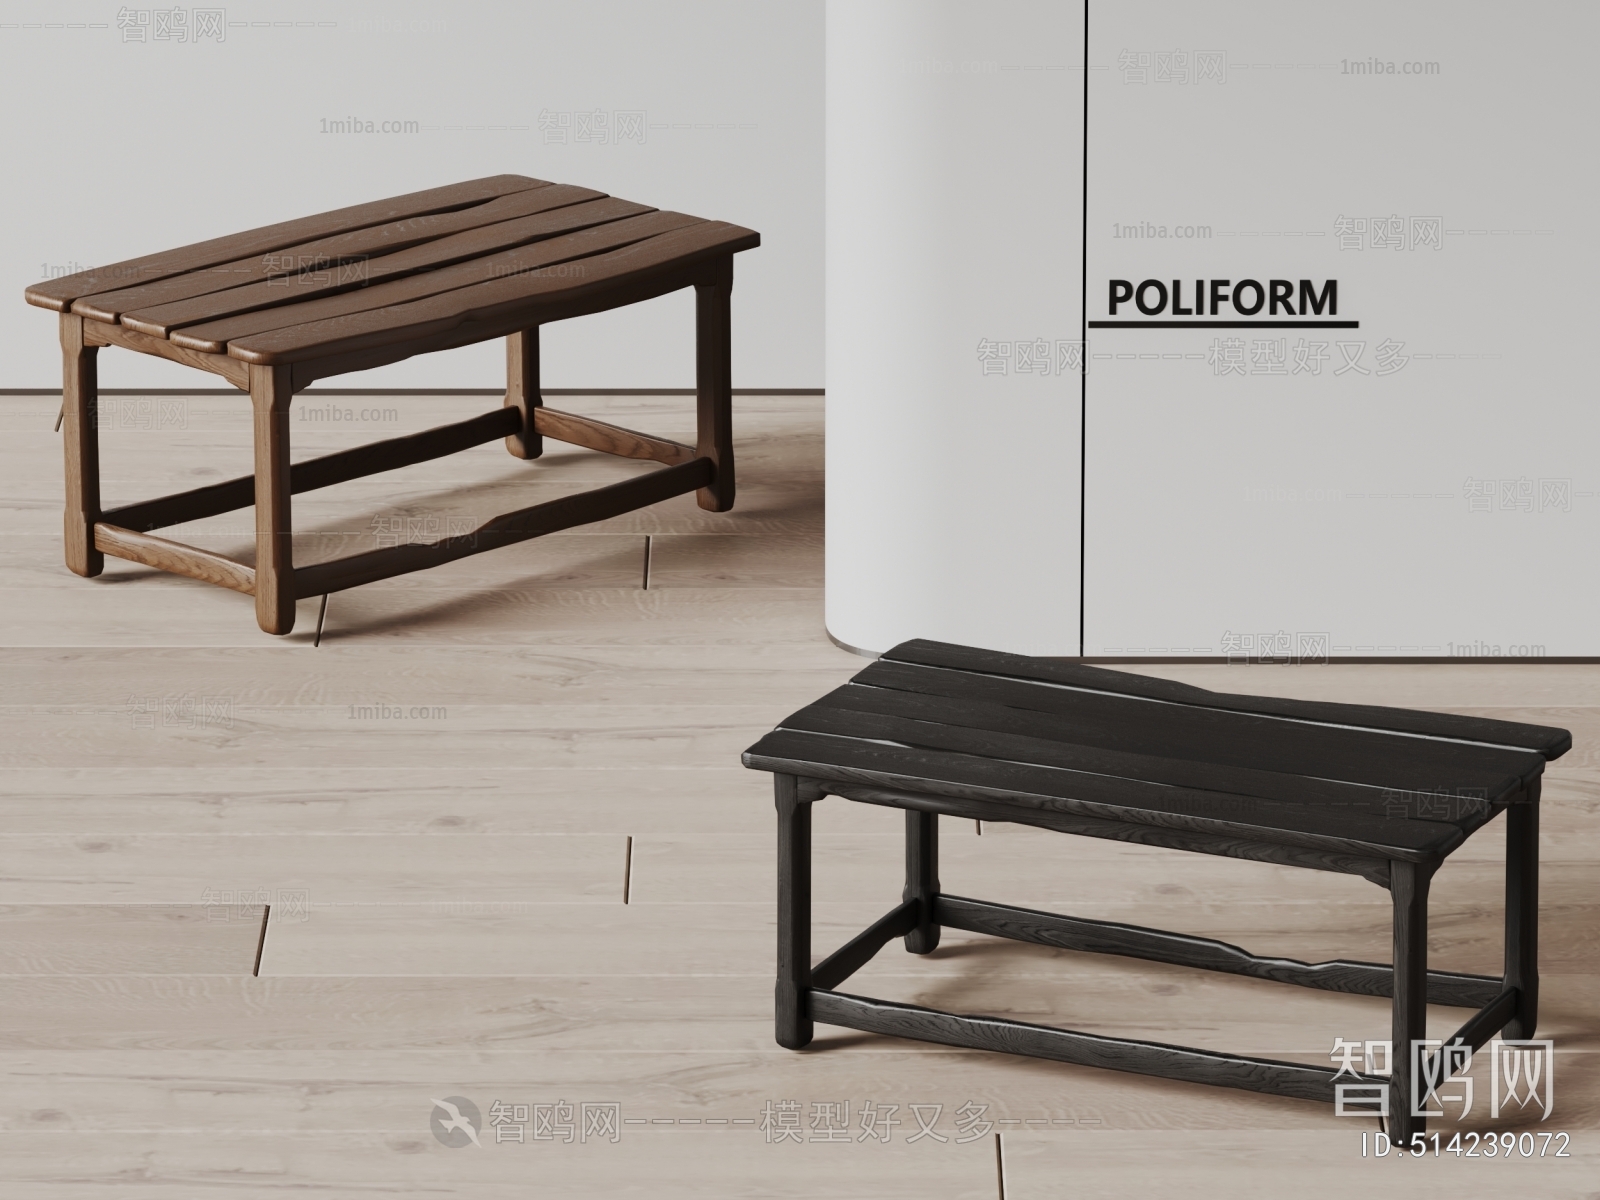 poliform现代凳子